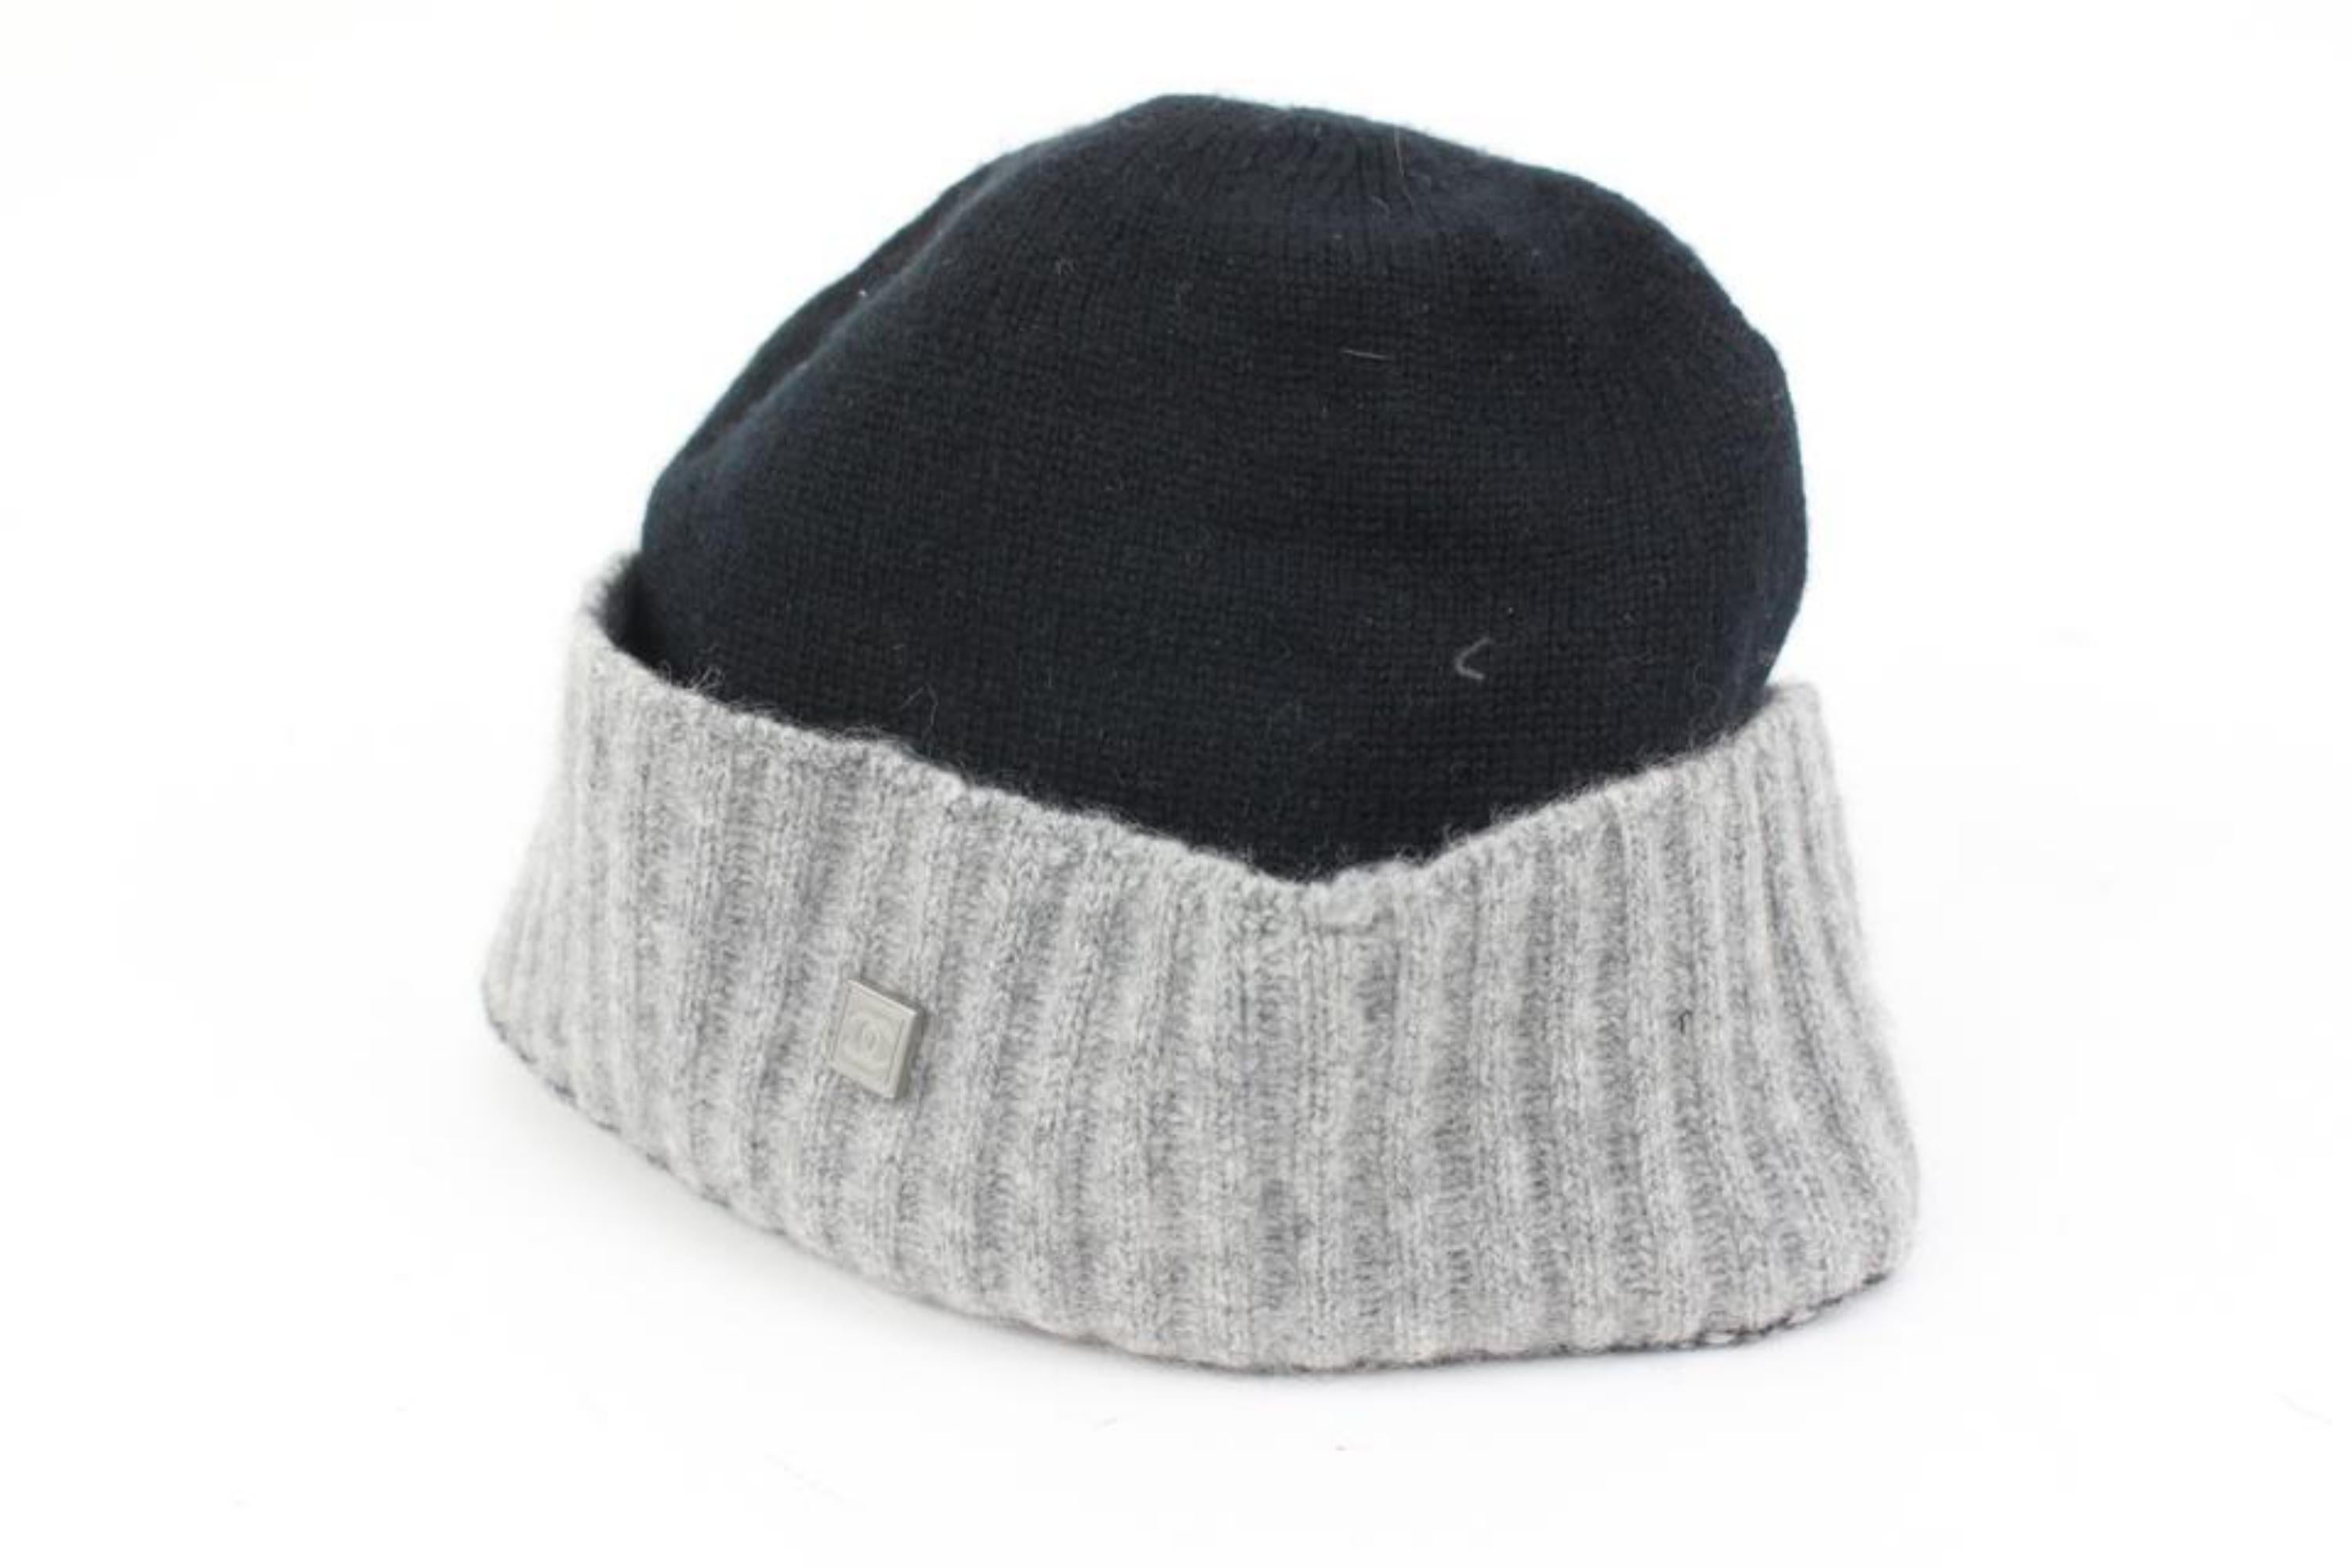 Chanel Black x Grey Cashmere CC Logo Beanie Skull Cap Ski Hat 53ck325s
Made In: Scotland
Measurements: Length:  10